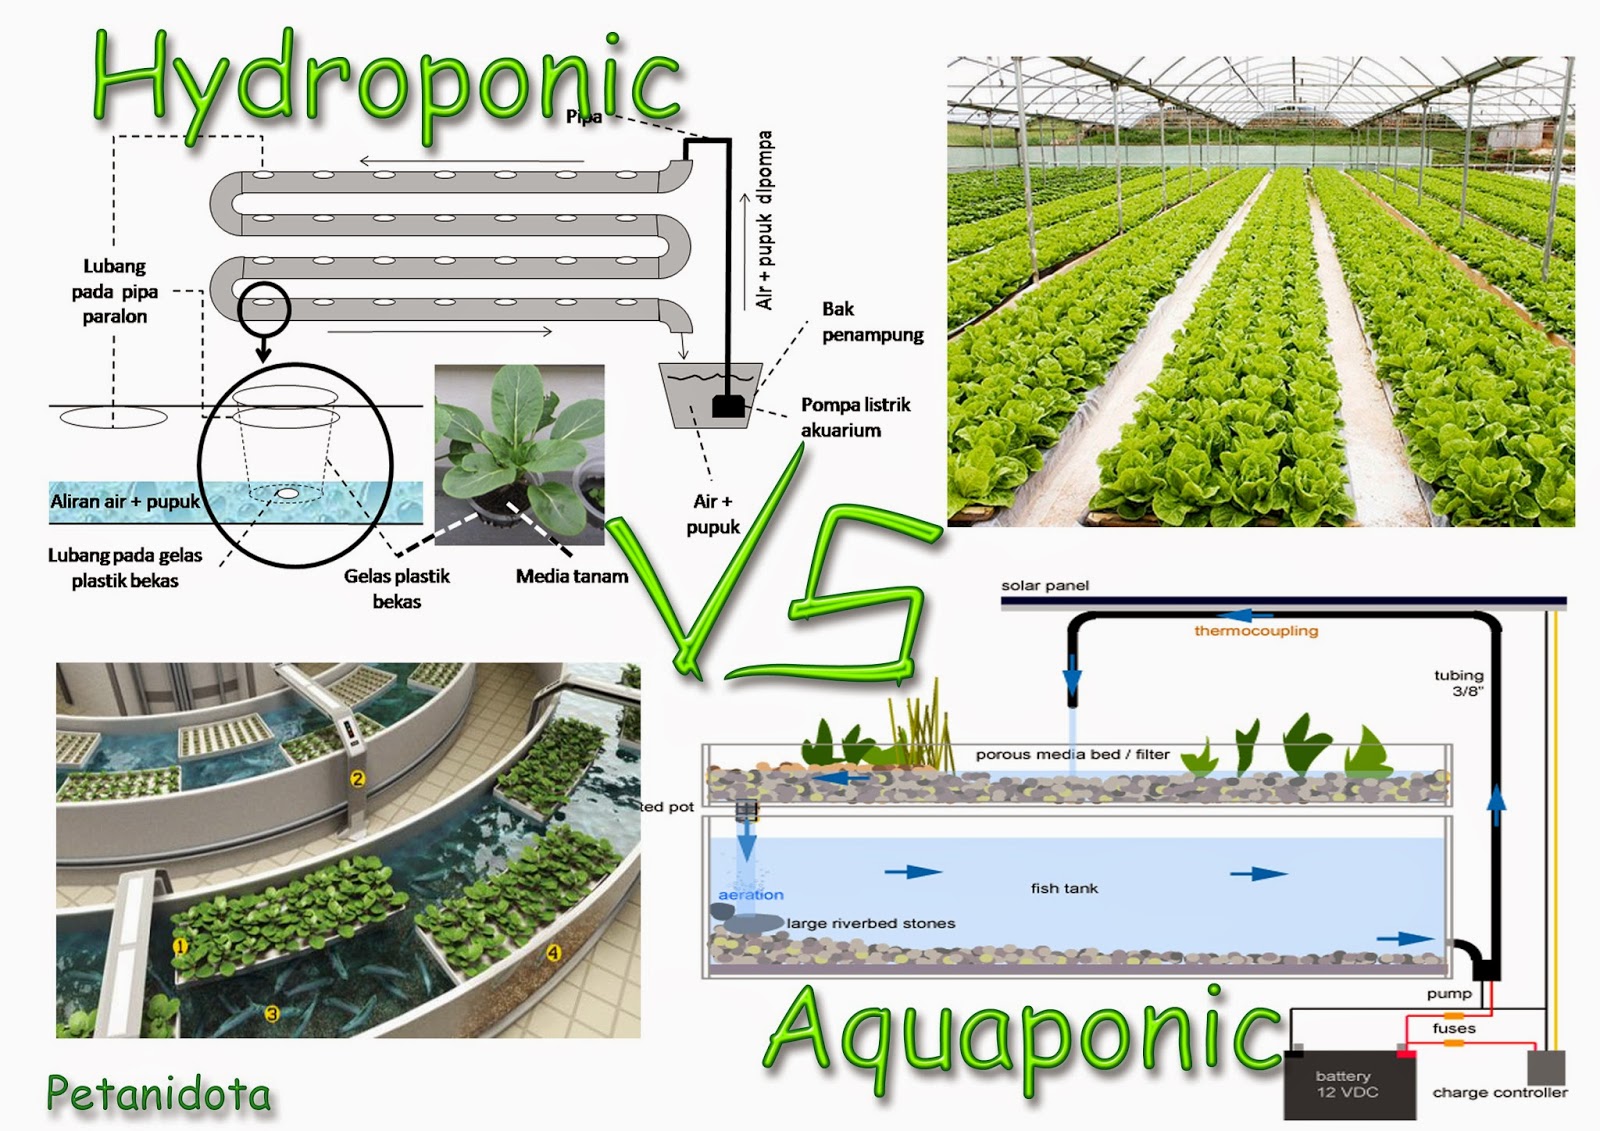 Hydroponics vs. Aeroponics vs. Aquaponics